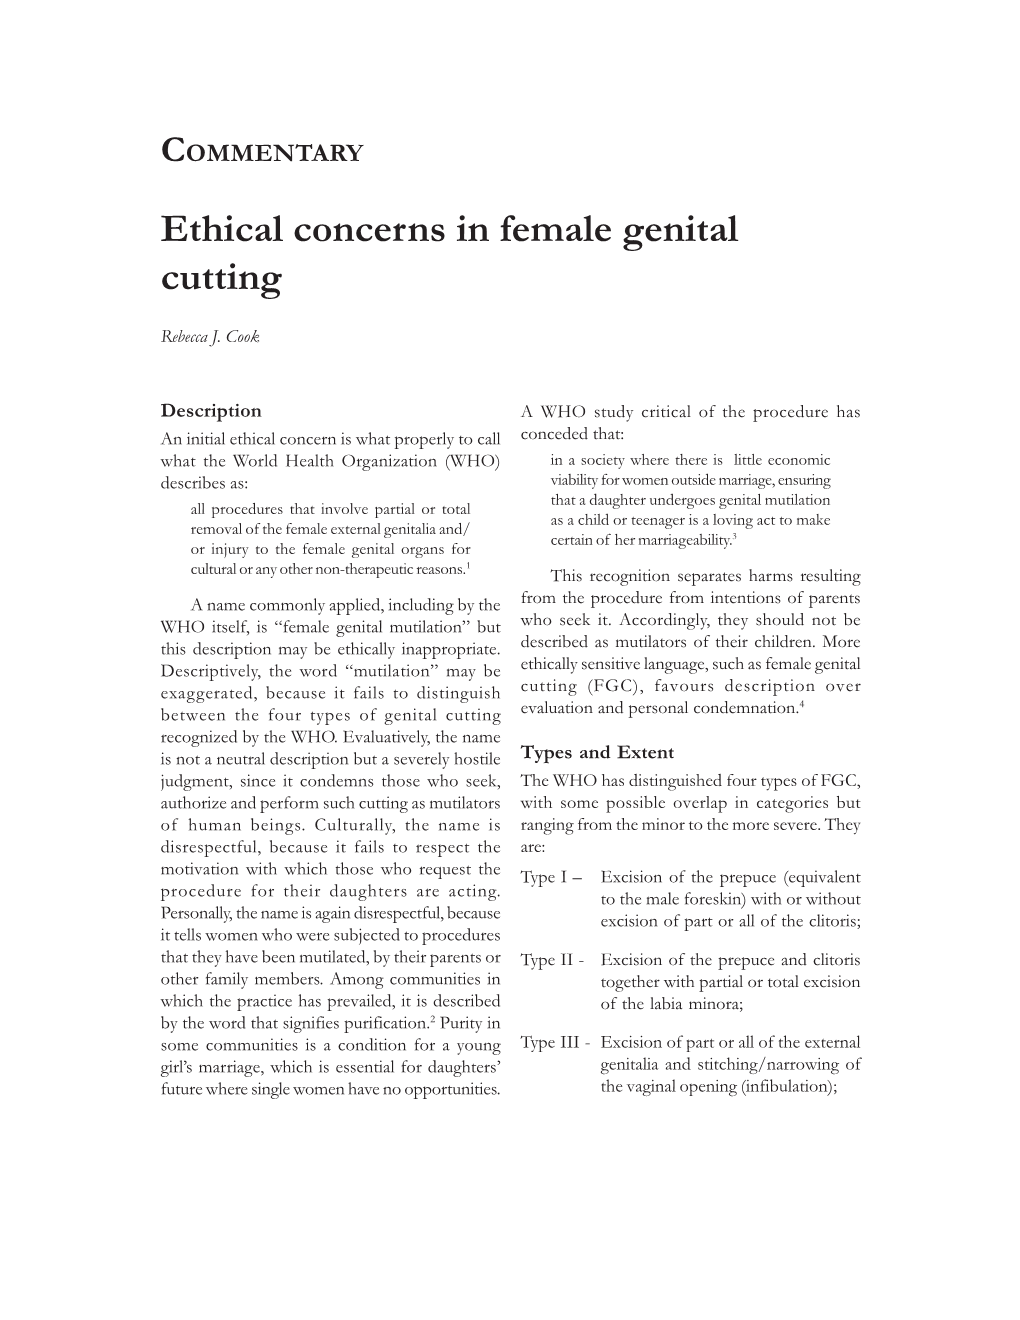 Ethical Concerns in Female Genital Cutting